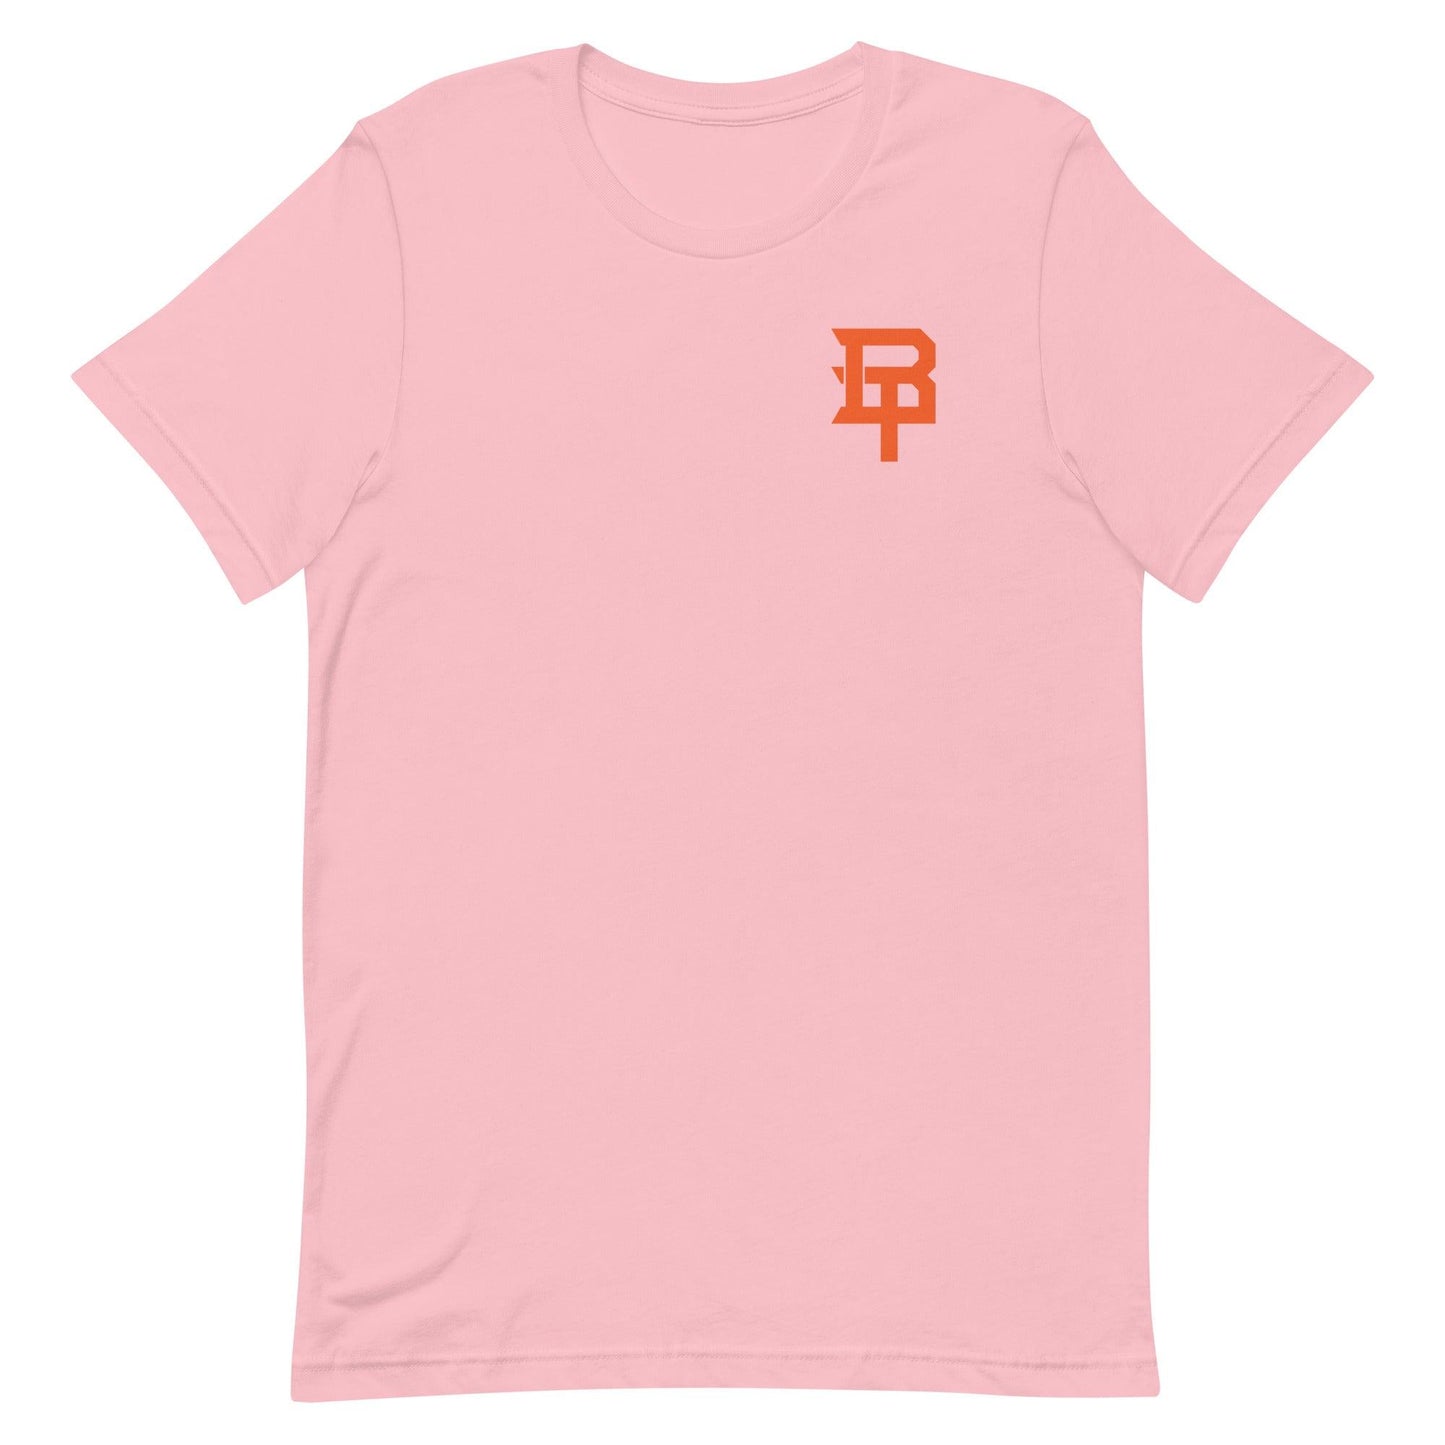 Brandon Turnage "BT" t-shirt - Fan Arch